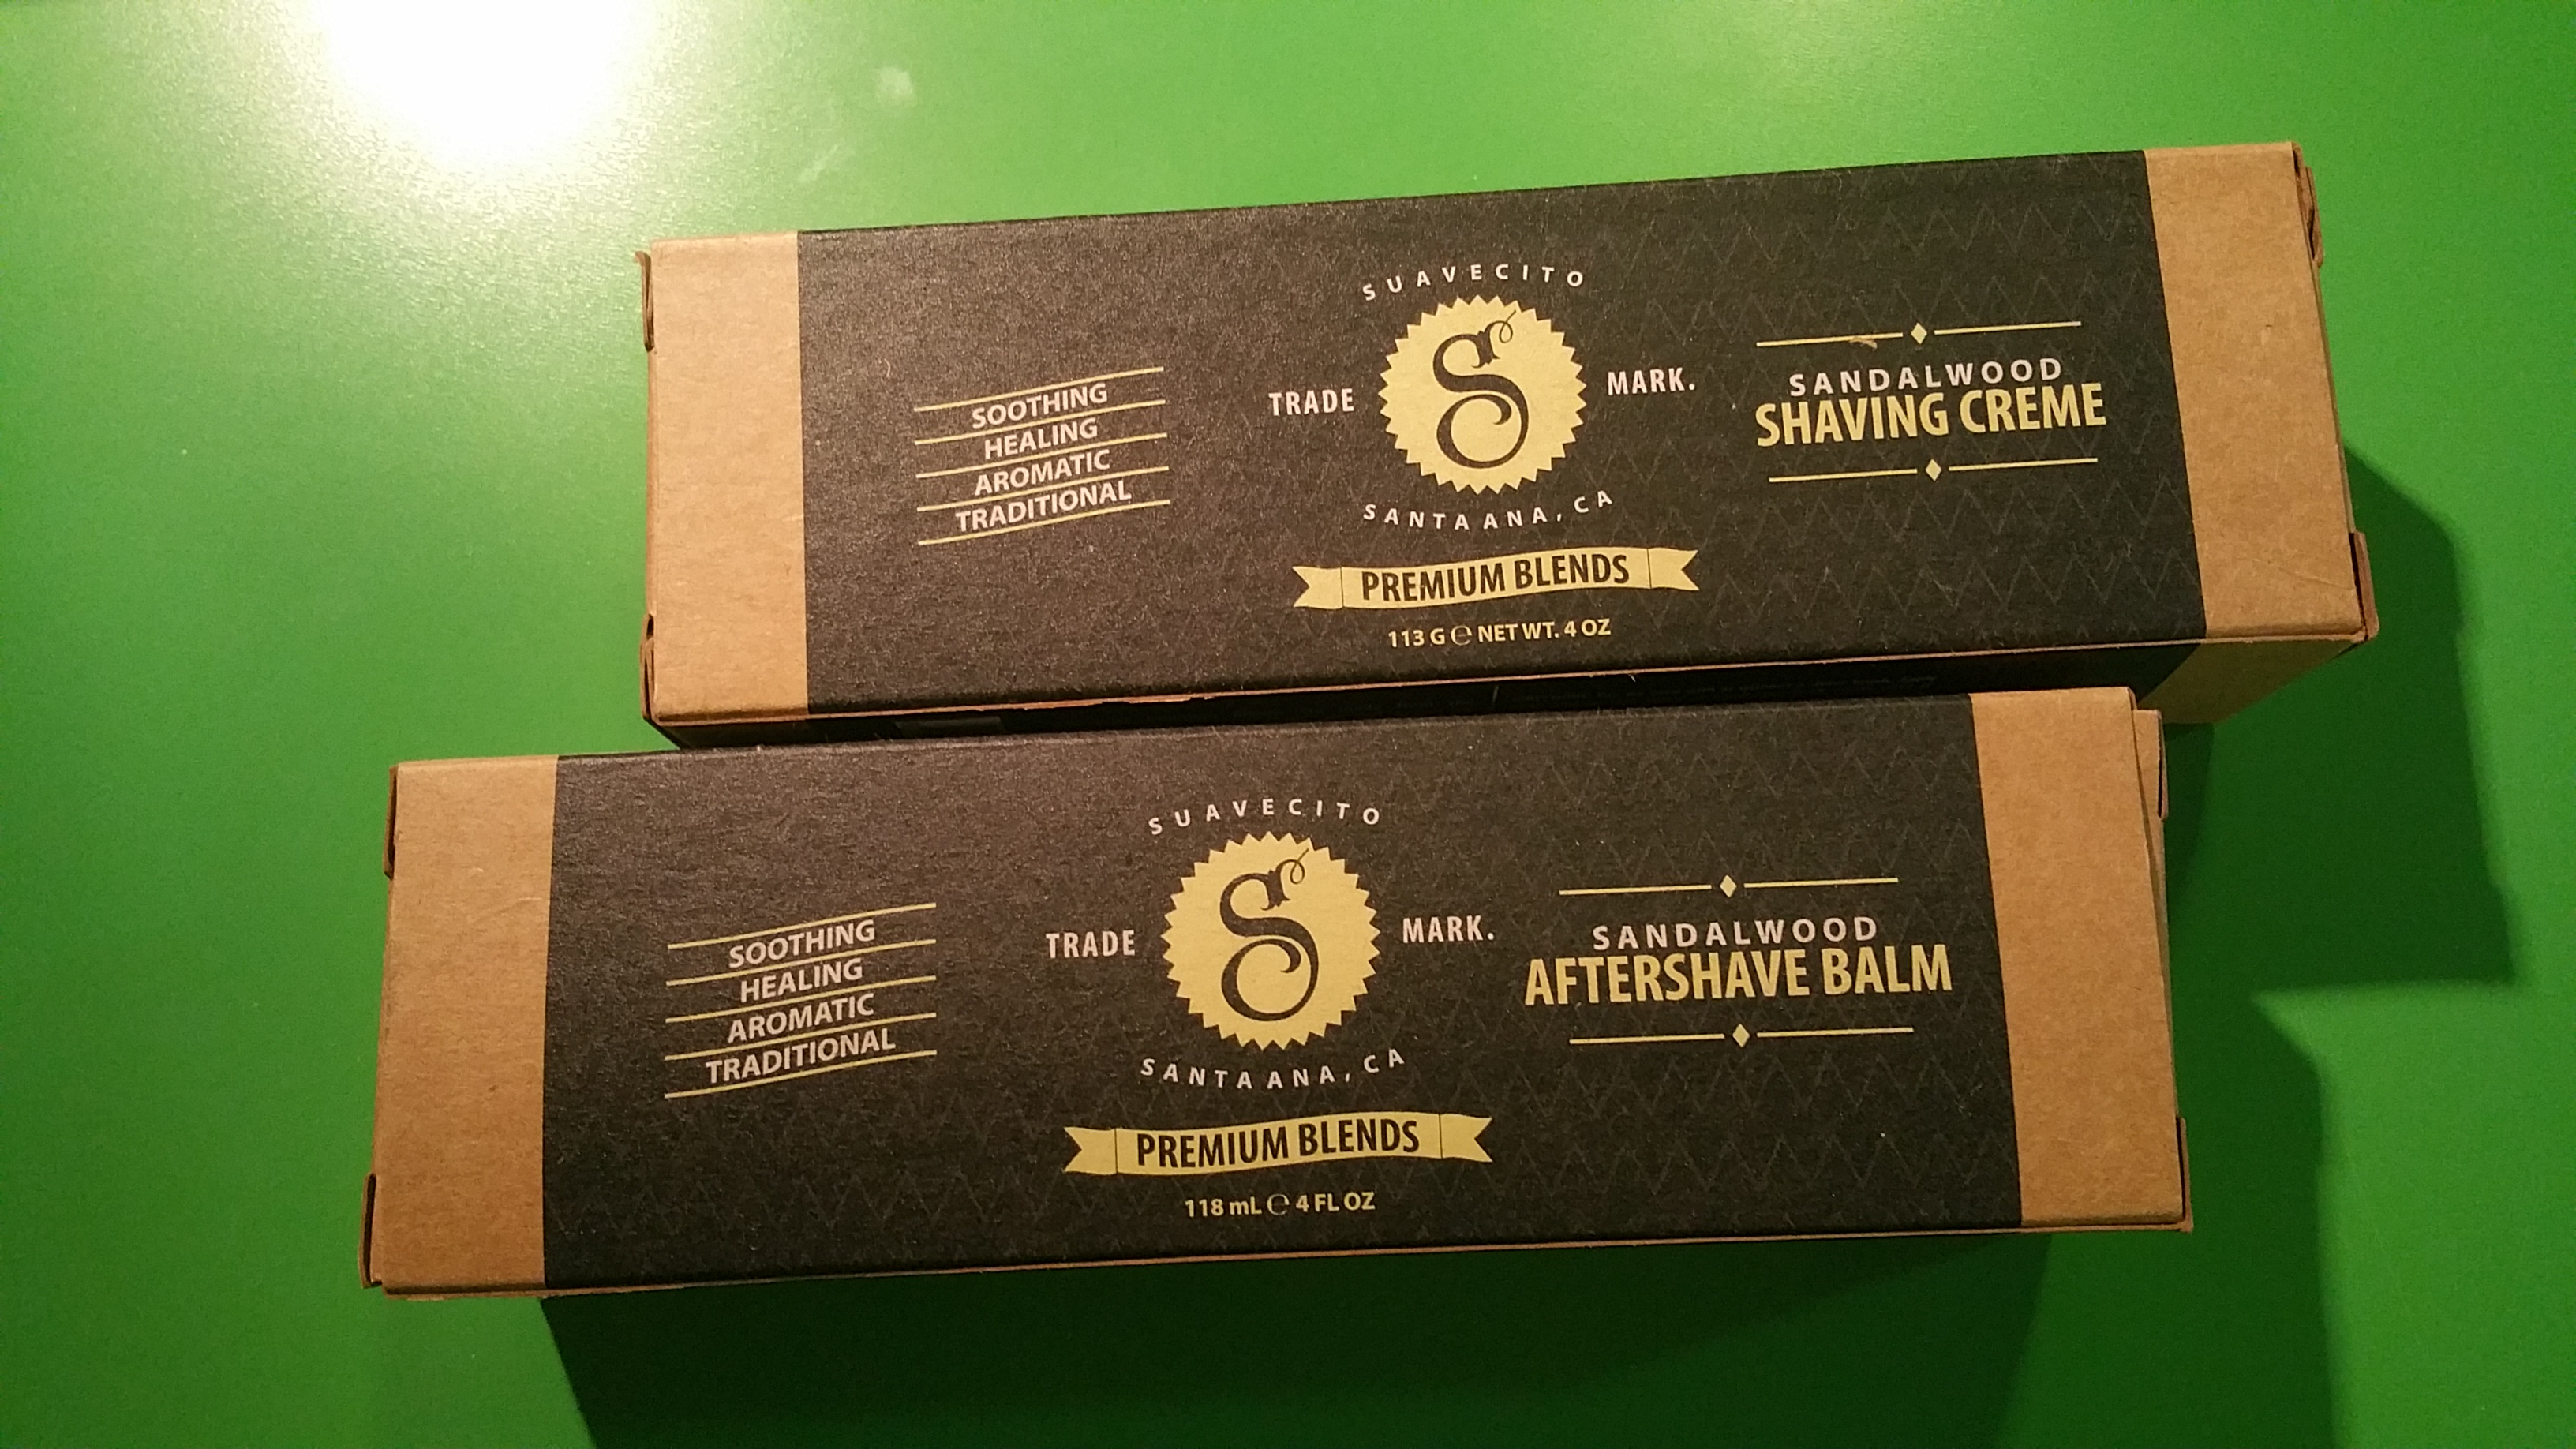 Suavecito Premium Blends – Sandalwood Shaving cream and aftershave balm